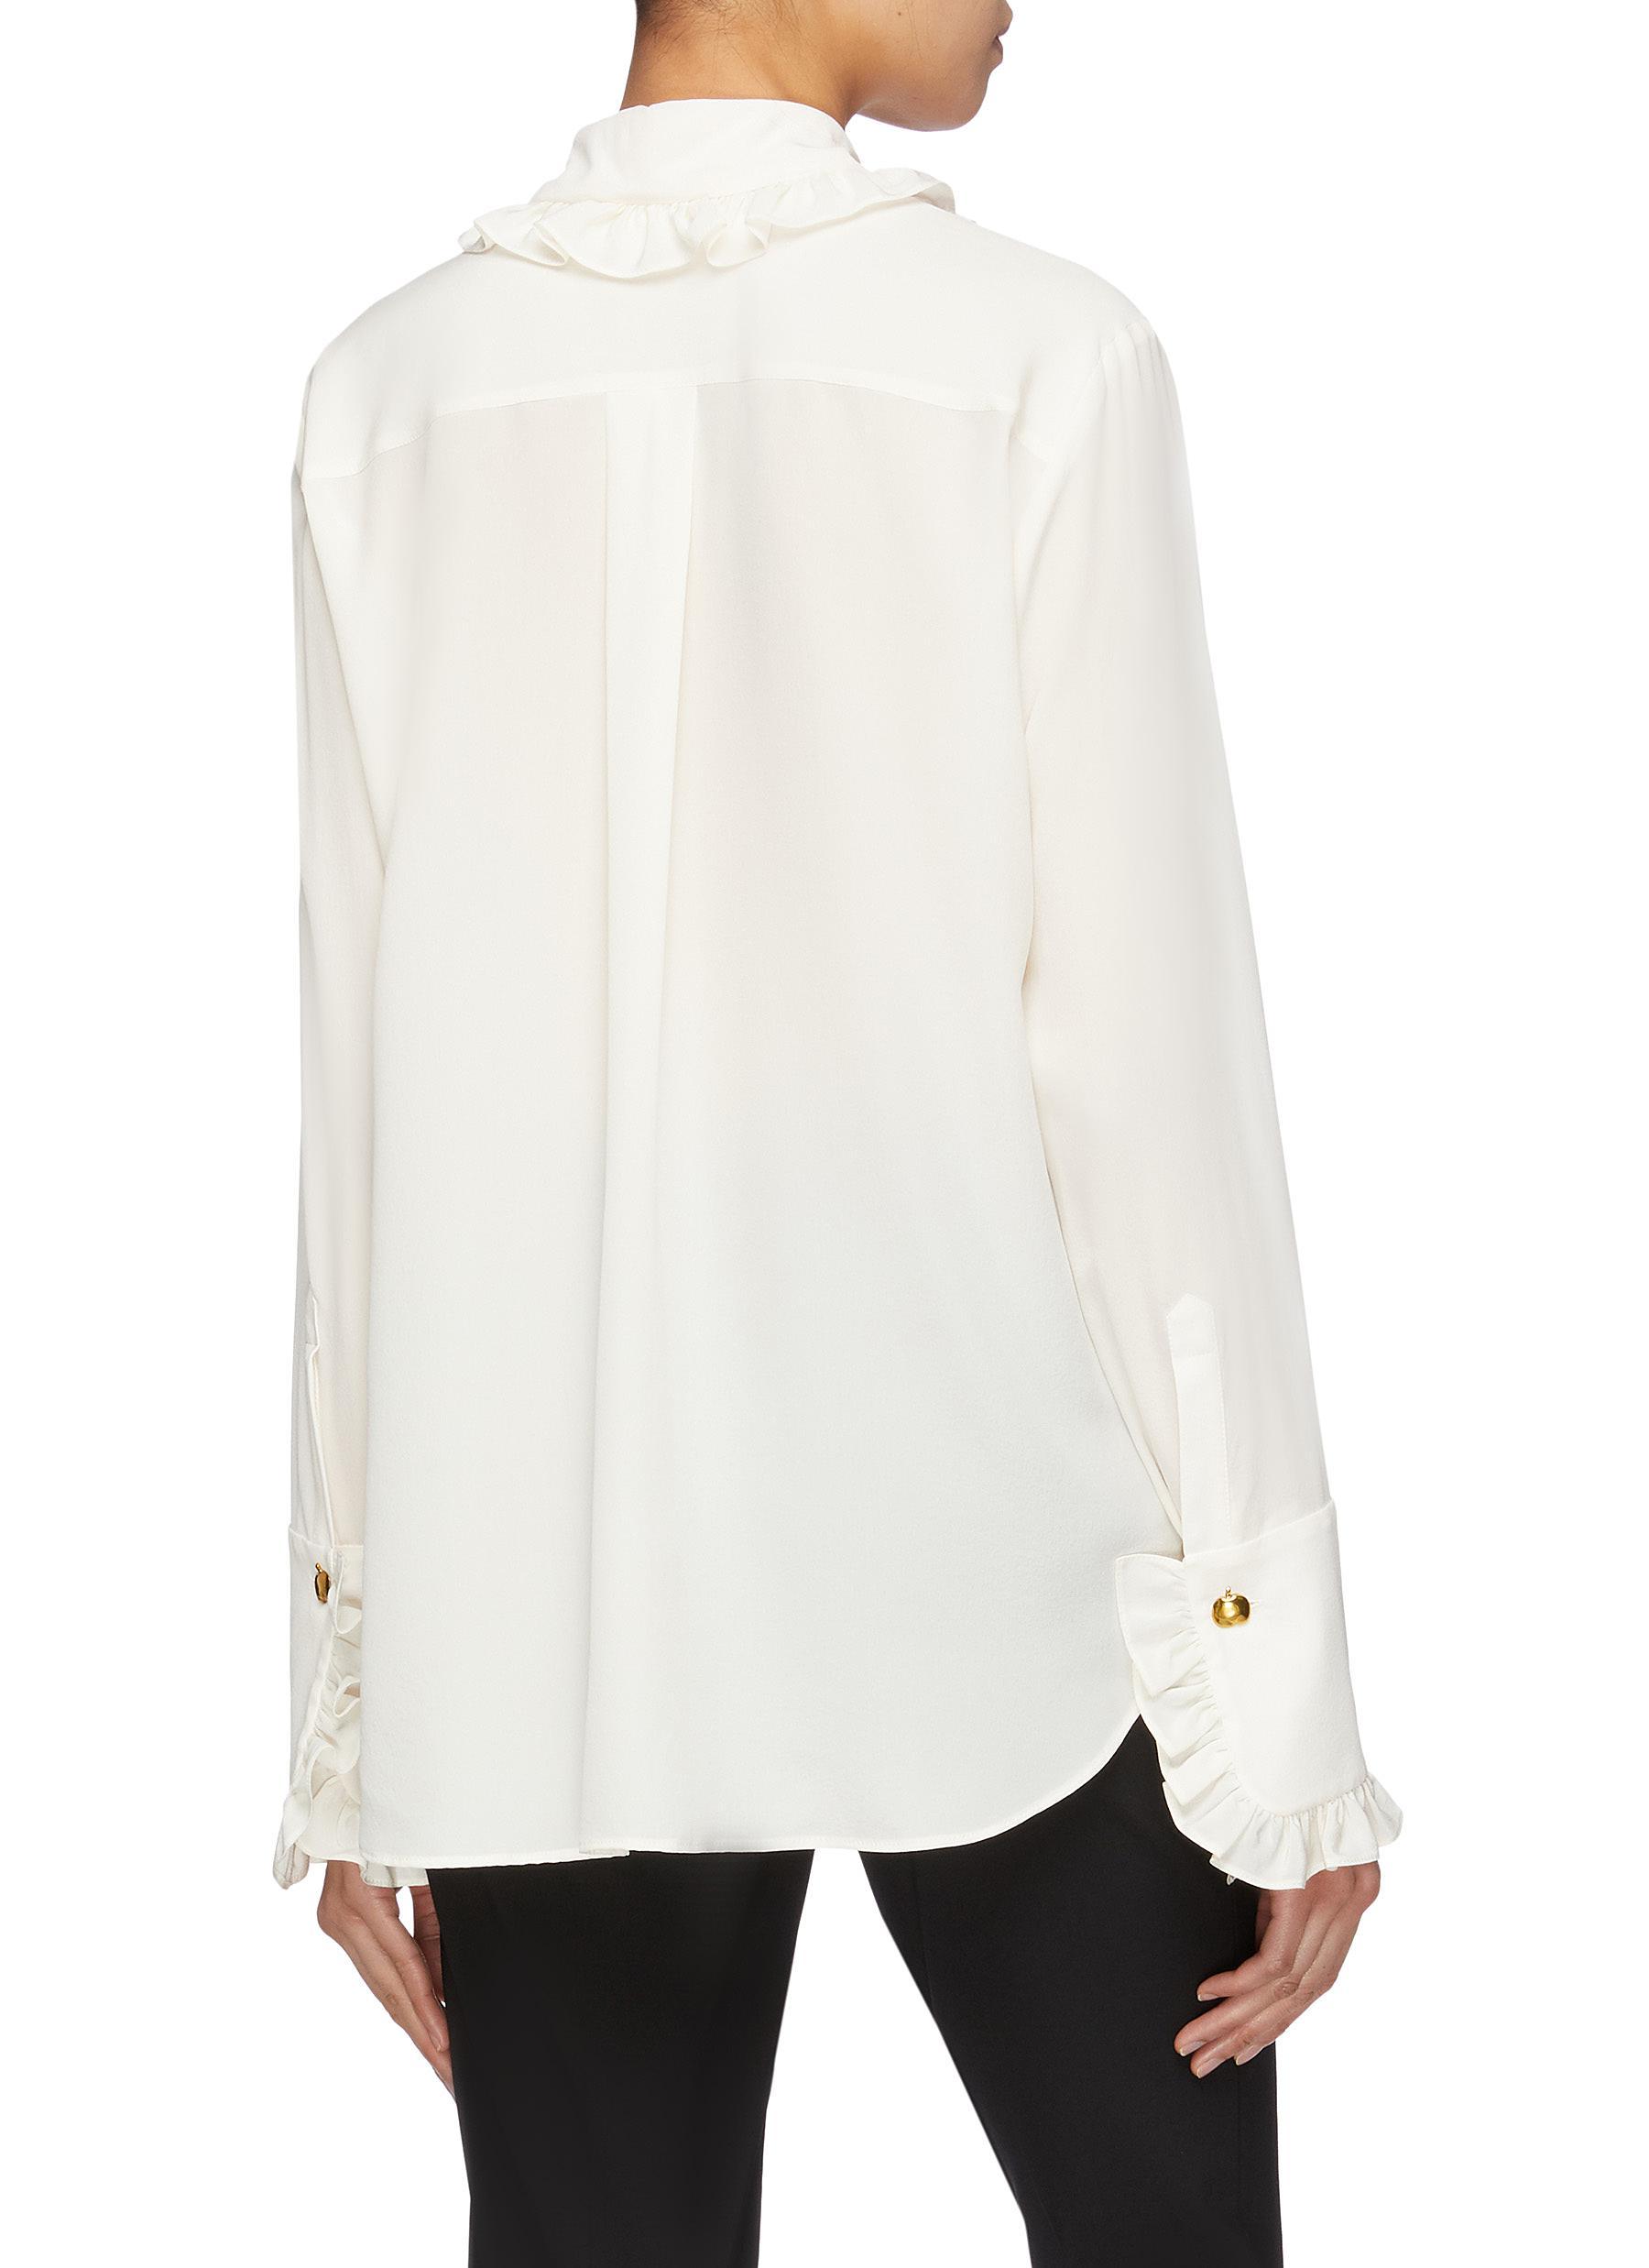 Stella McCartney Ruffle Trim Silk Crepe Shirt in White for Men - Lyst